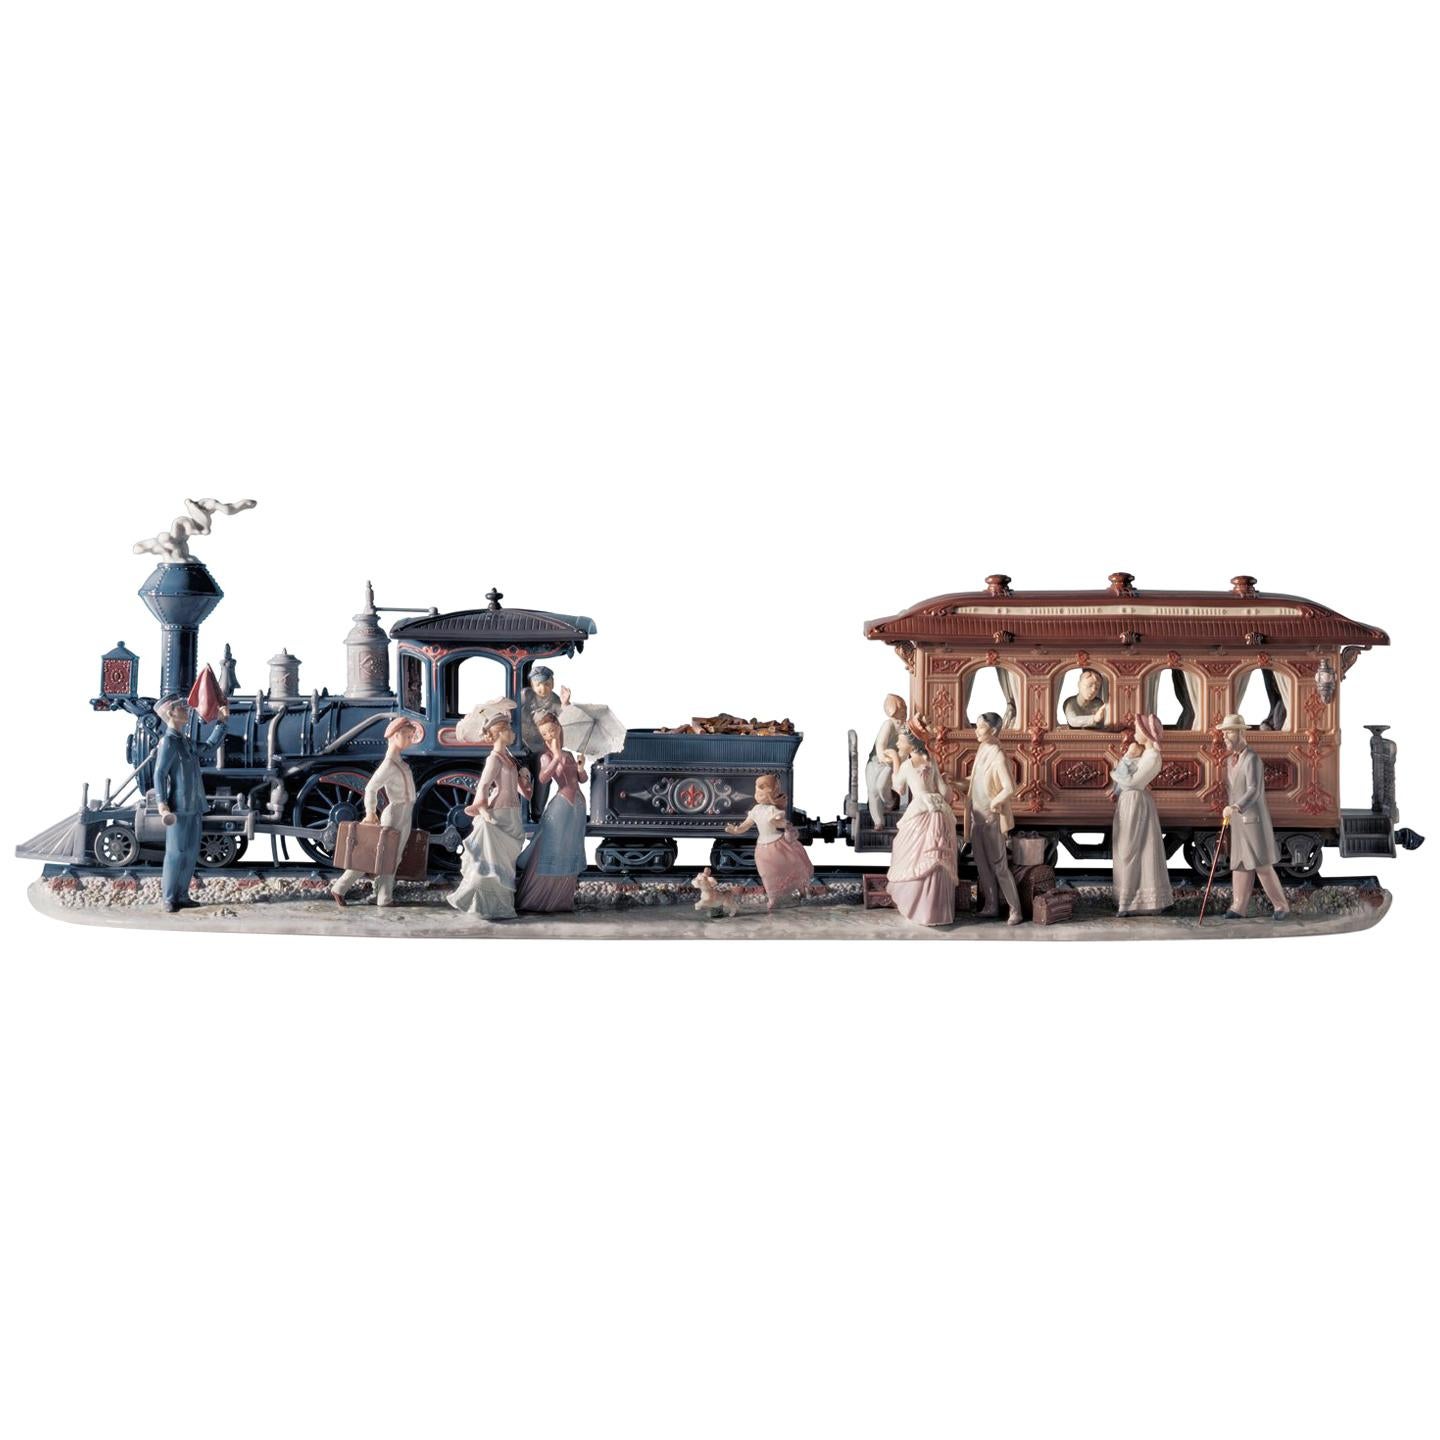 Grand Adventure Train Sculpture, Limited Edition For Sale